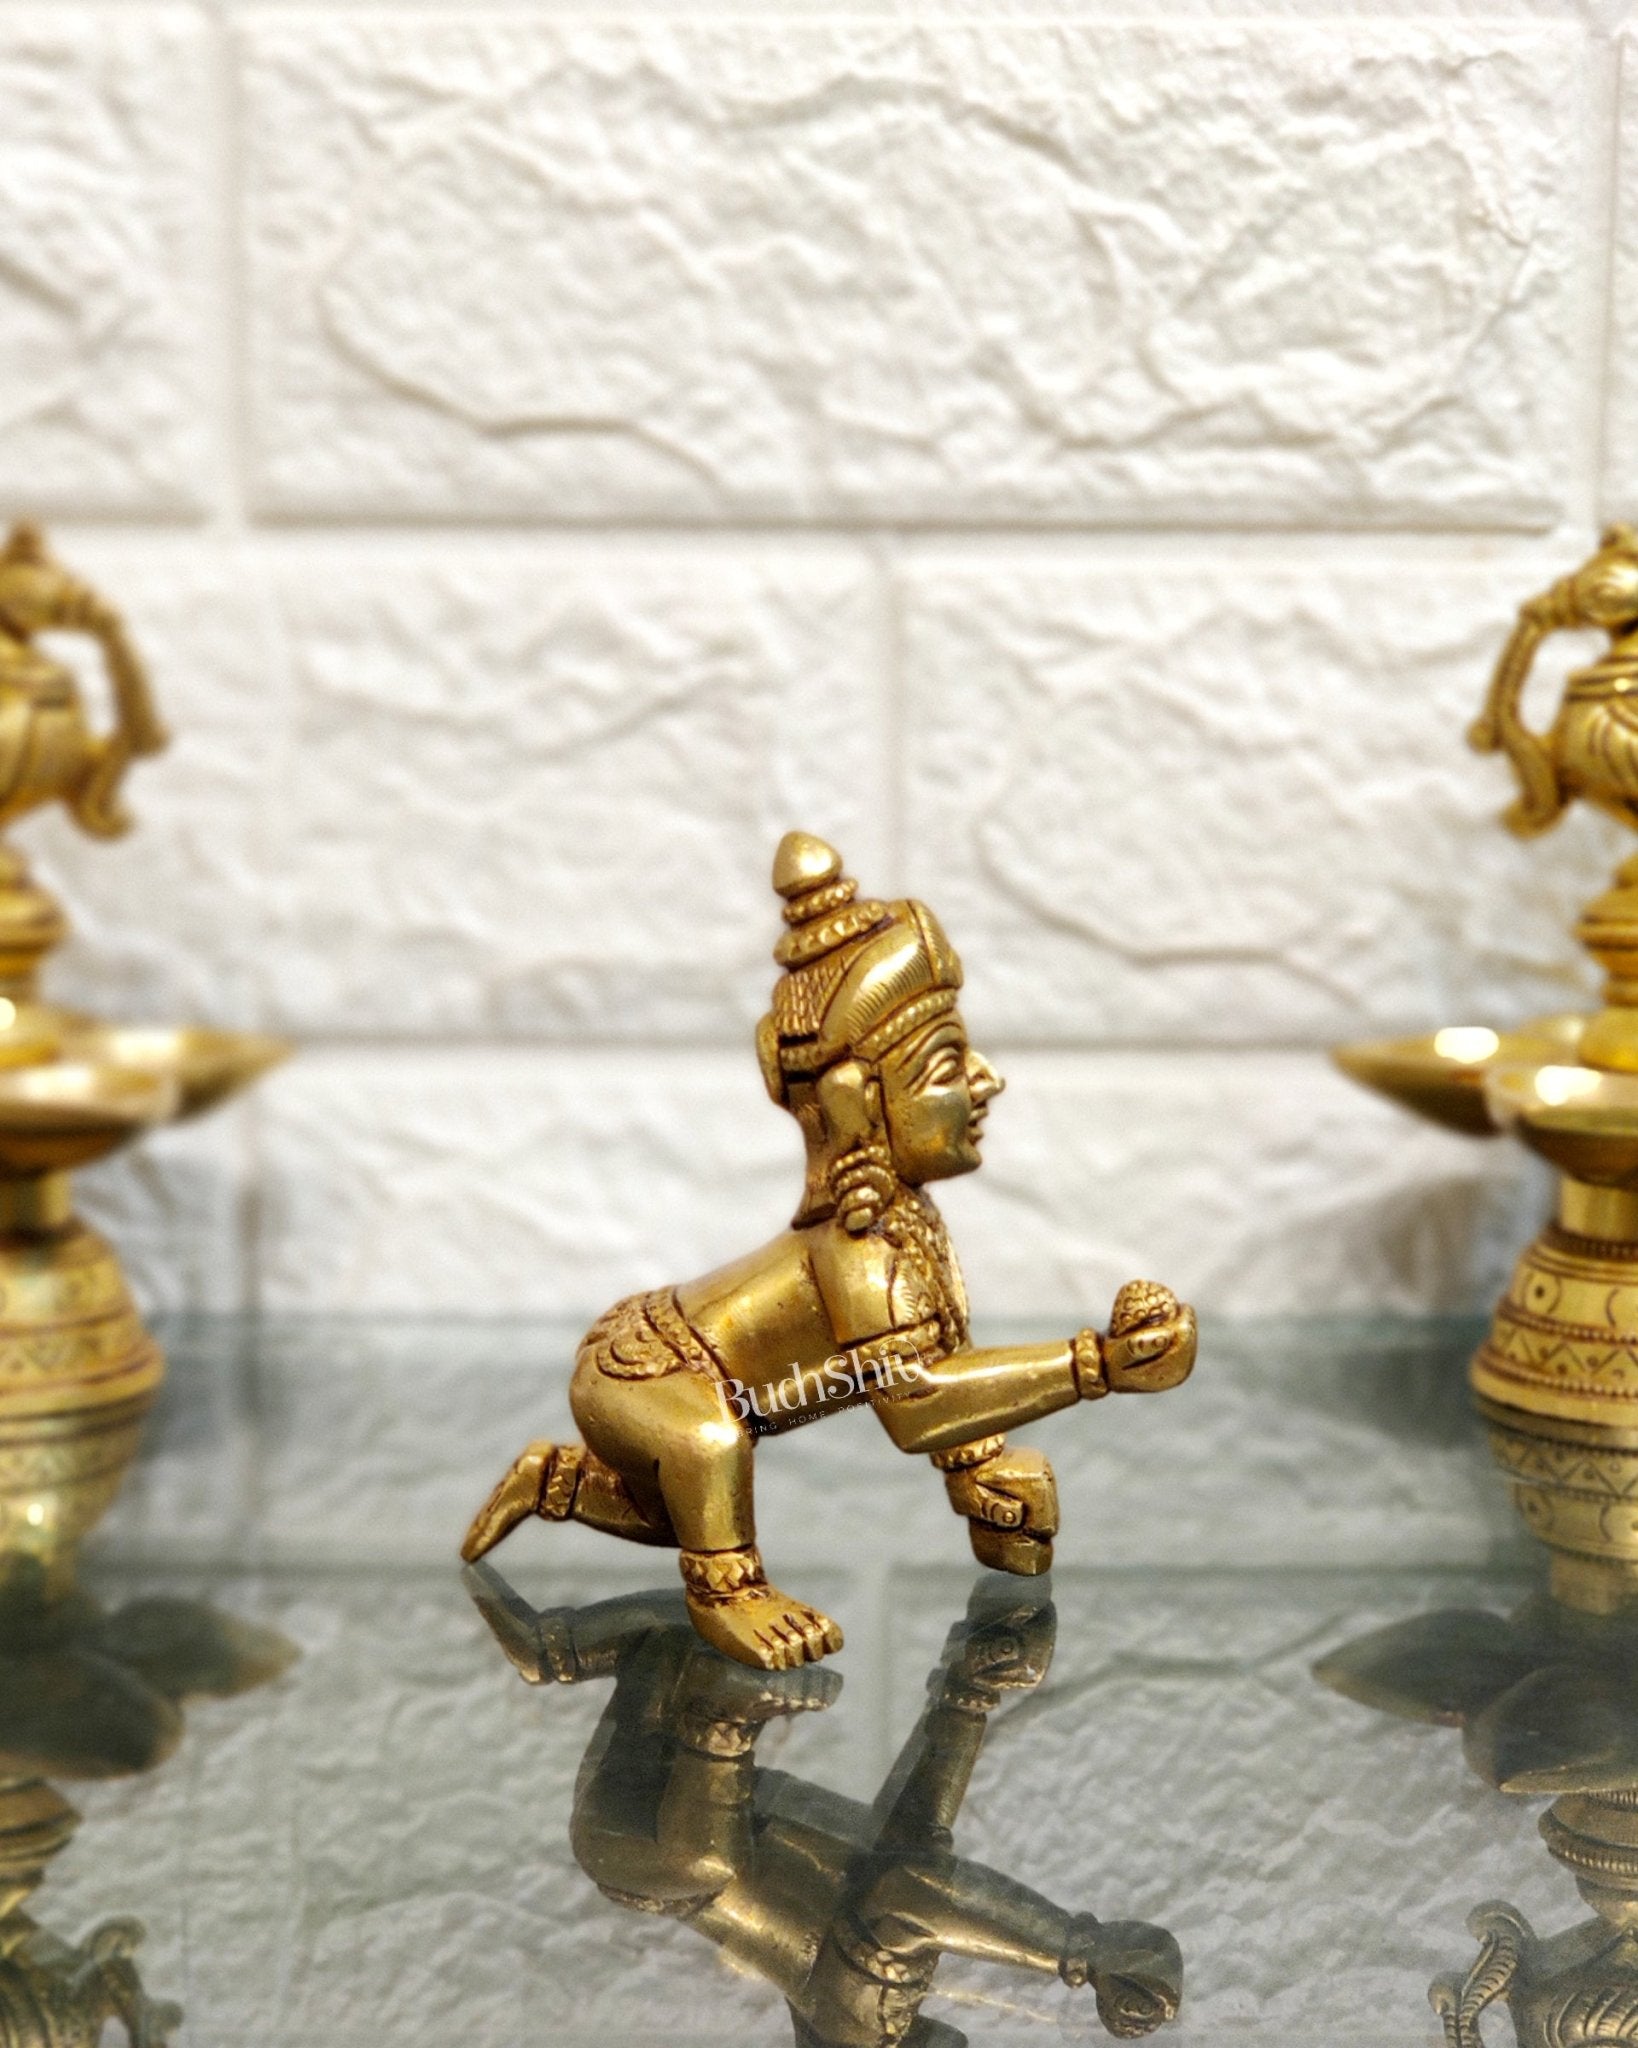 Superfine Brass Ladoo Gopal Krishna Idol | Baby Form | Height 3 inch - Budhshiv.com